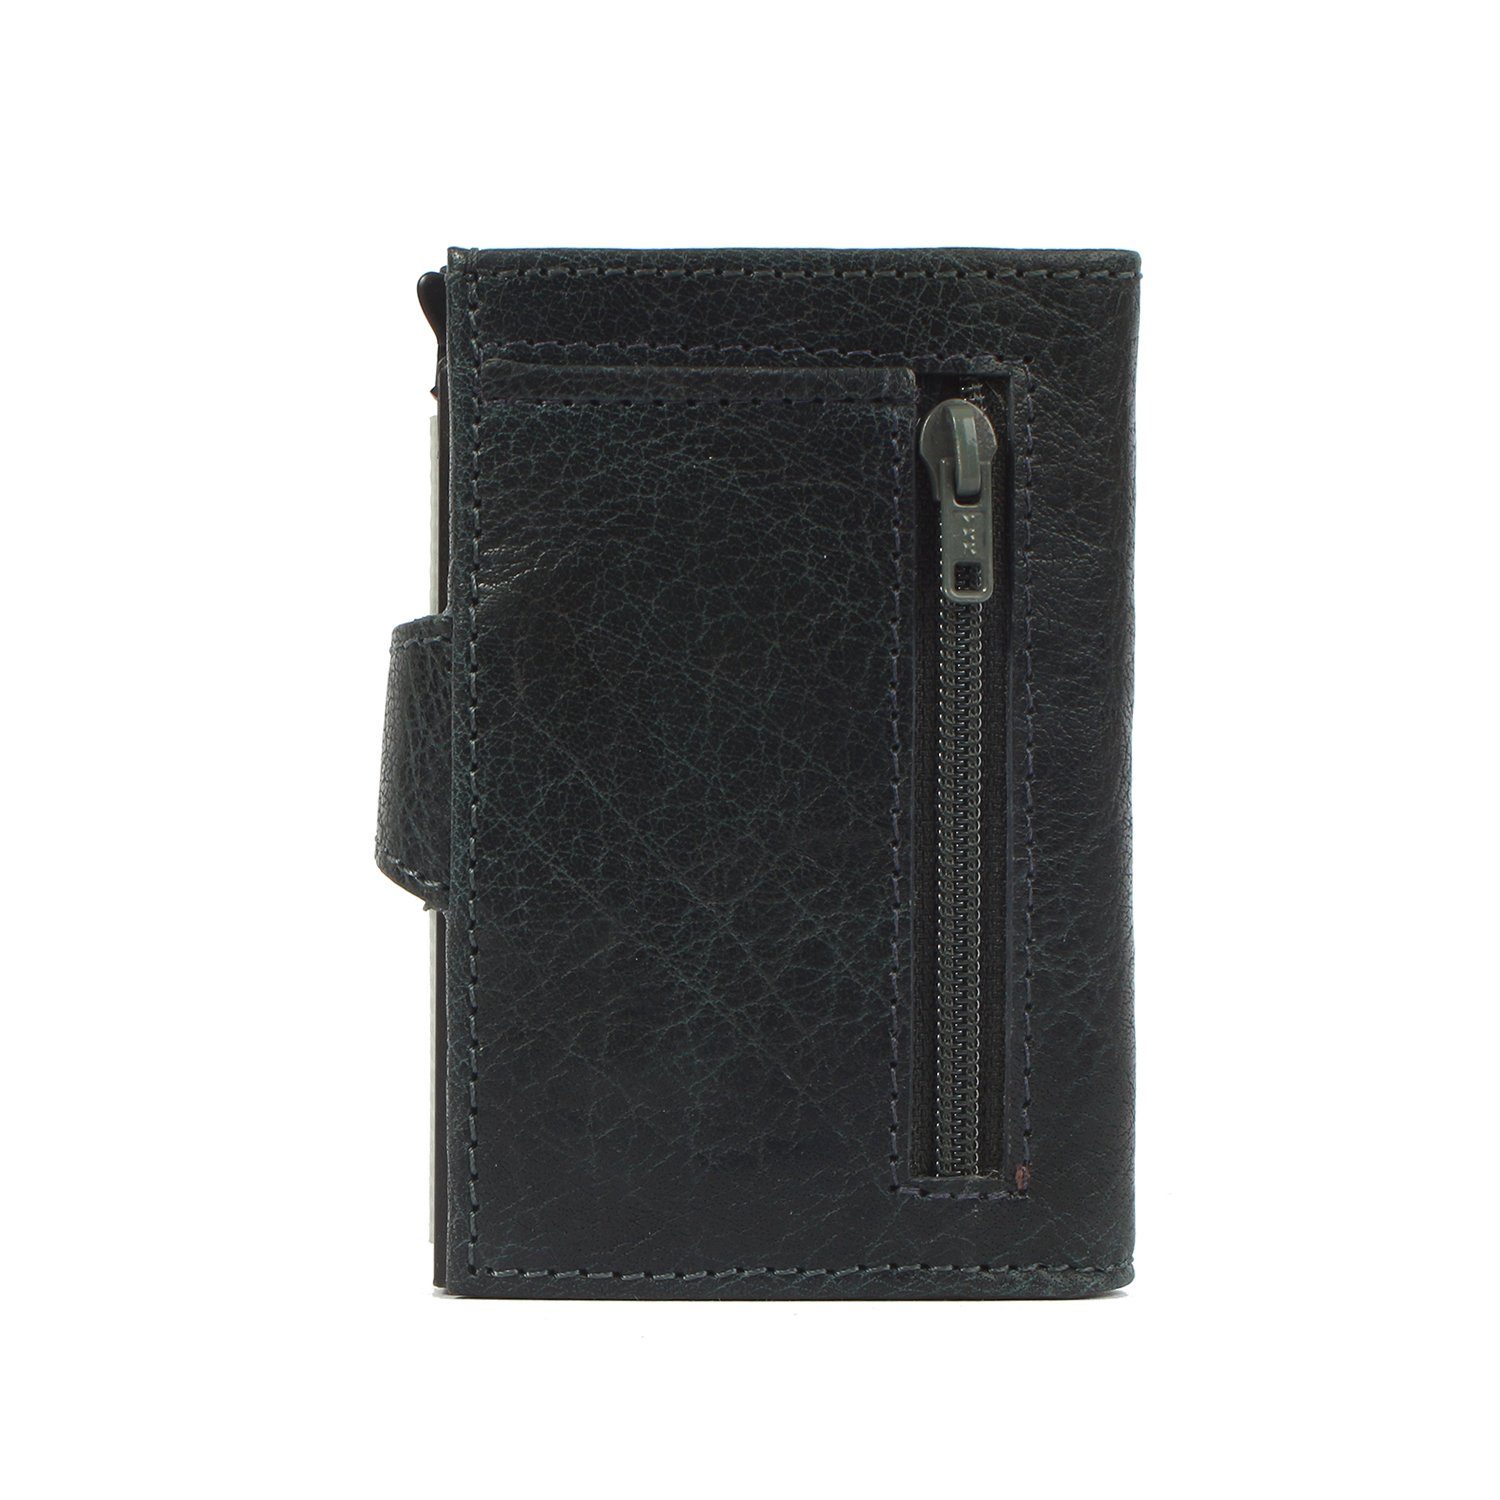 Margelisch Leder Kreditkartenbörse single Geldbörse Upcycling noonyu Mini aus steelblue leather,